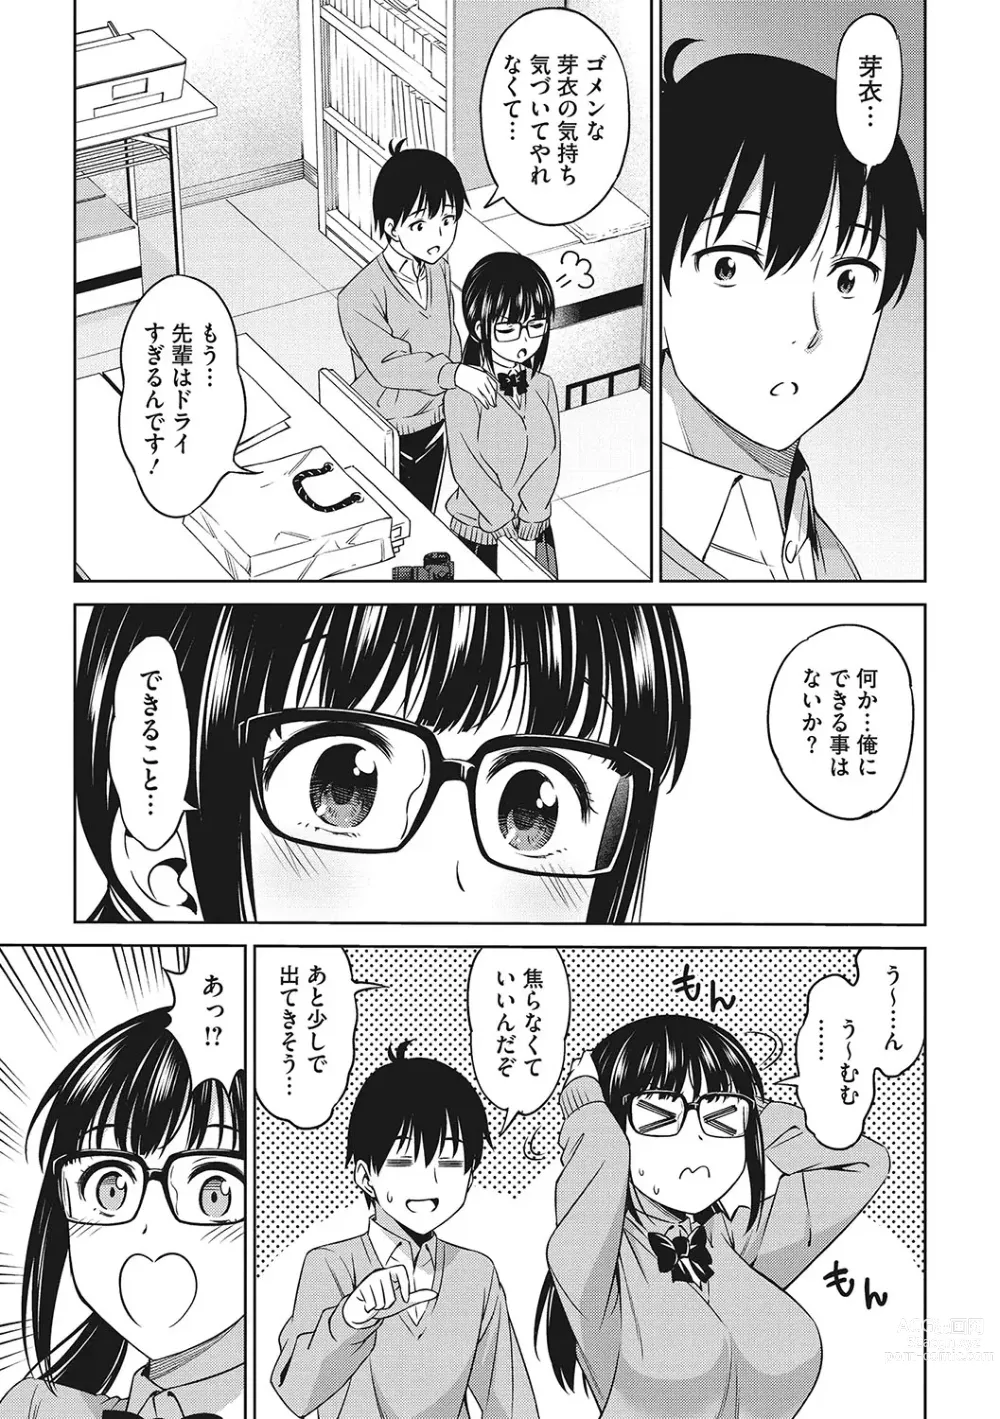 Page 6 of manga Omoide Kudasai